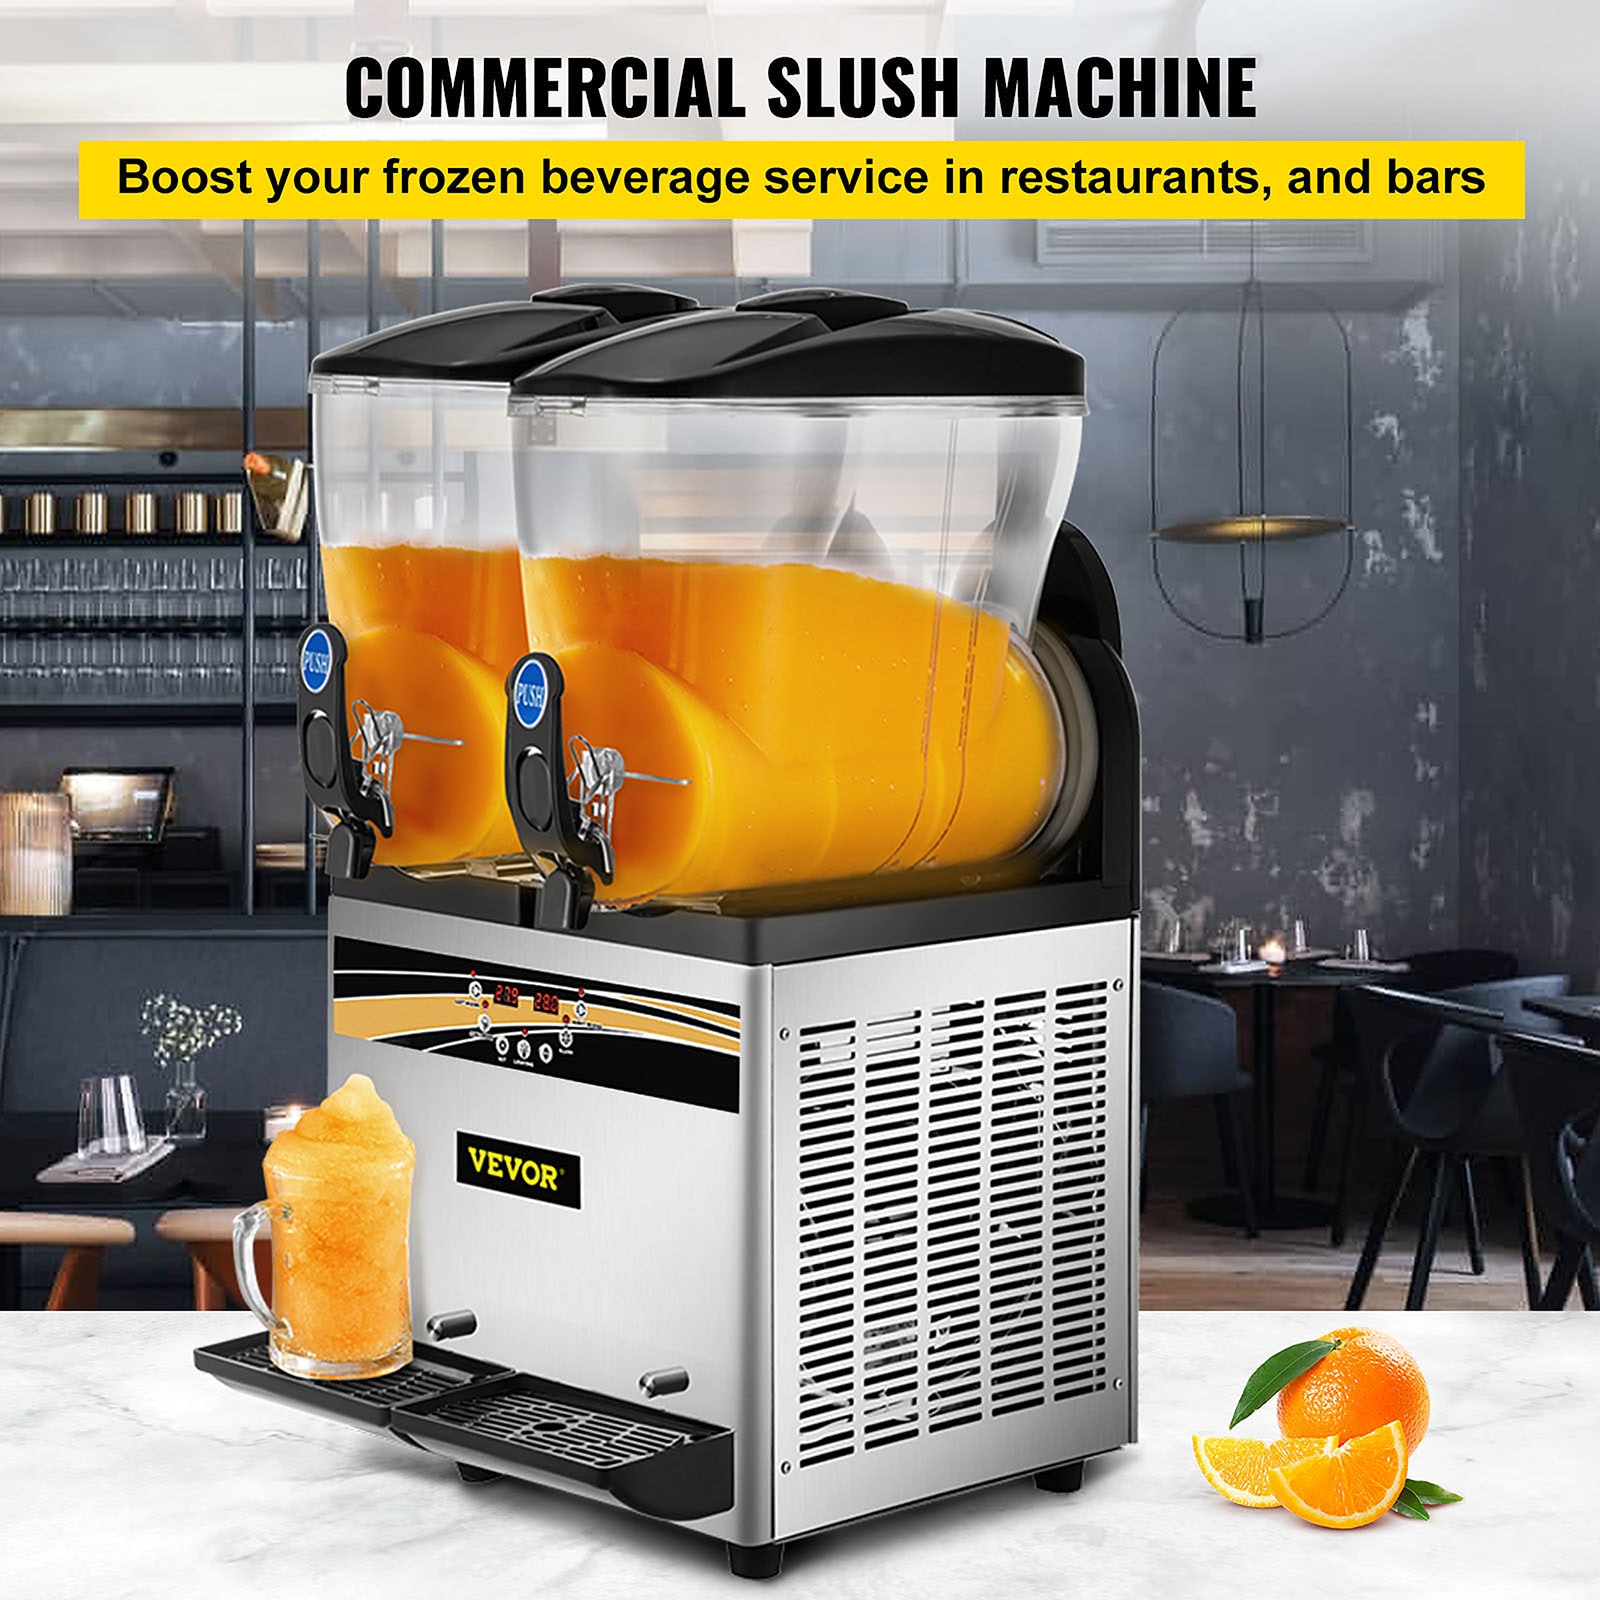 VEVOR Commercial Slushy Machine, 6 L x 2 Tanks 50 Cups, 700W 110V, Stainless Steel Margarita Smoothie Frozen Drink Maker, Perf